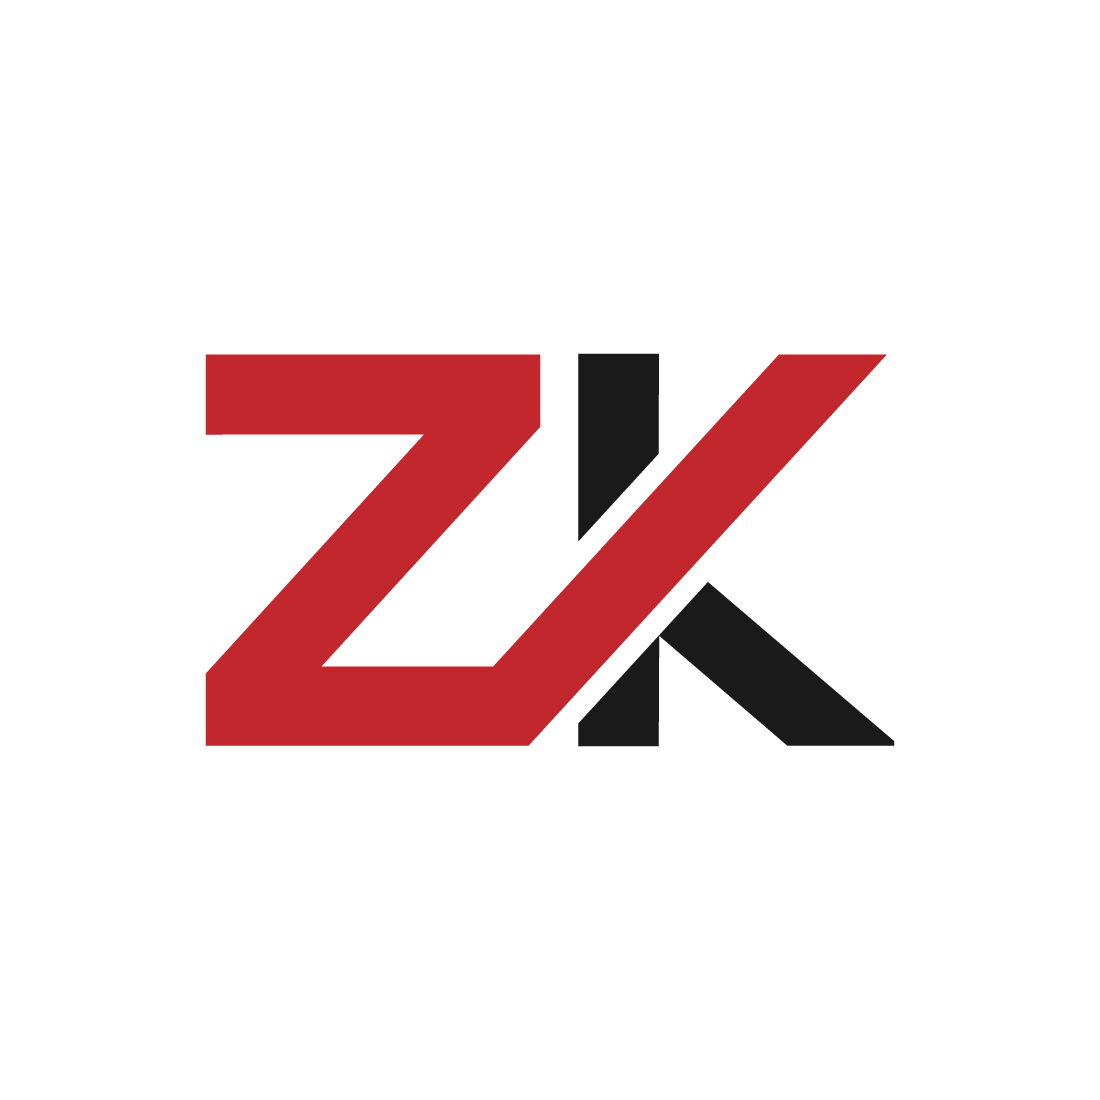 ZK logo design cover image.